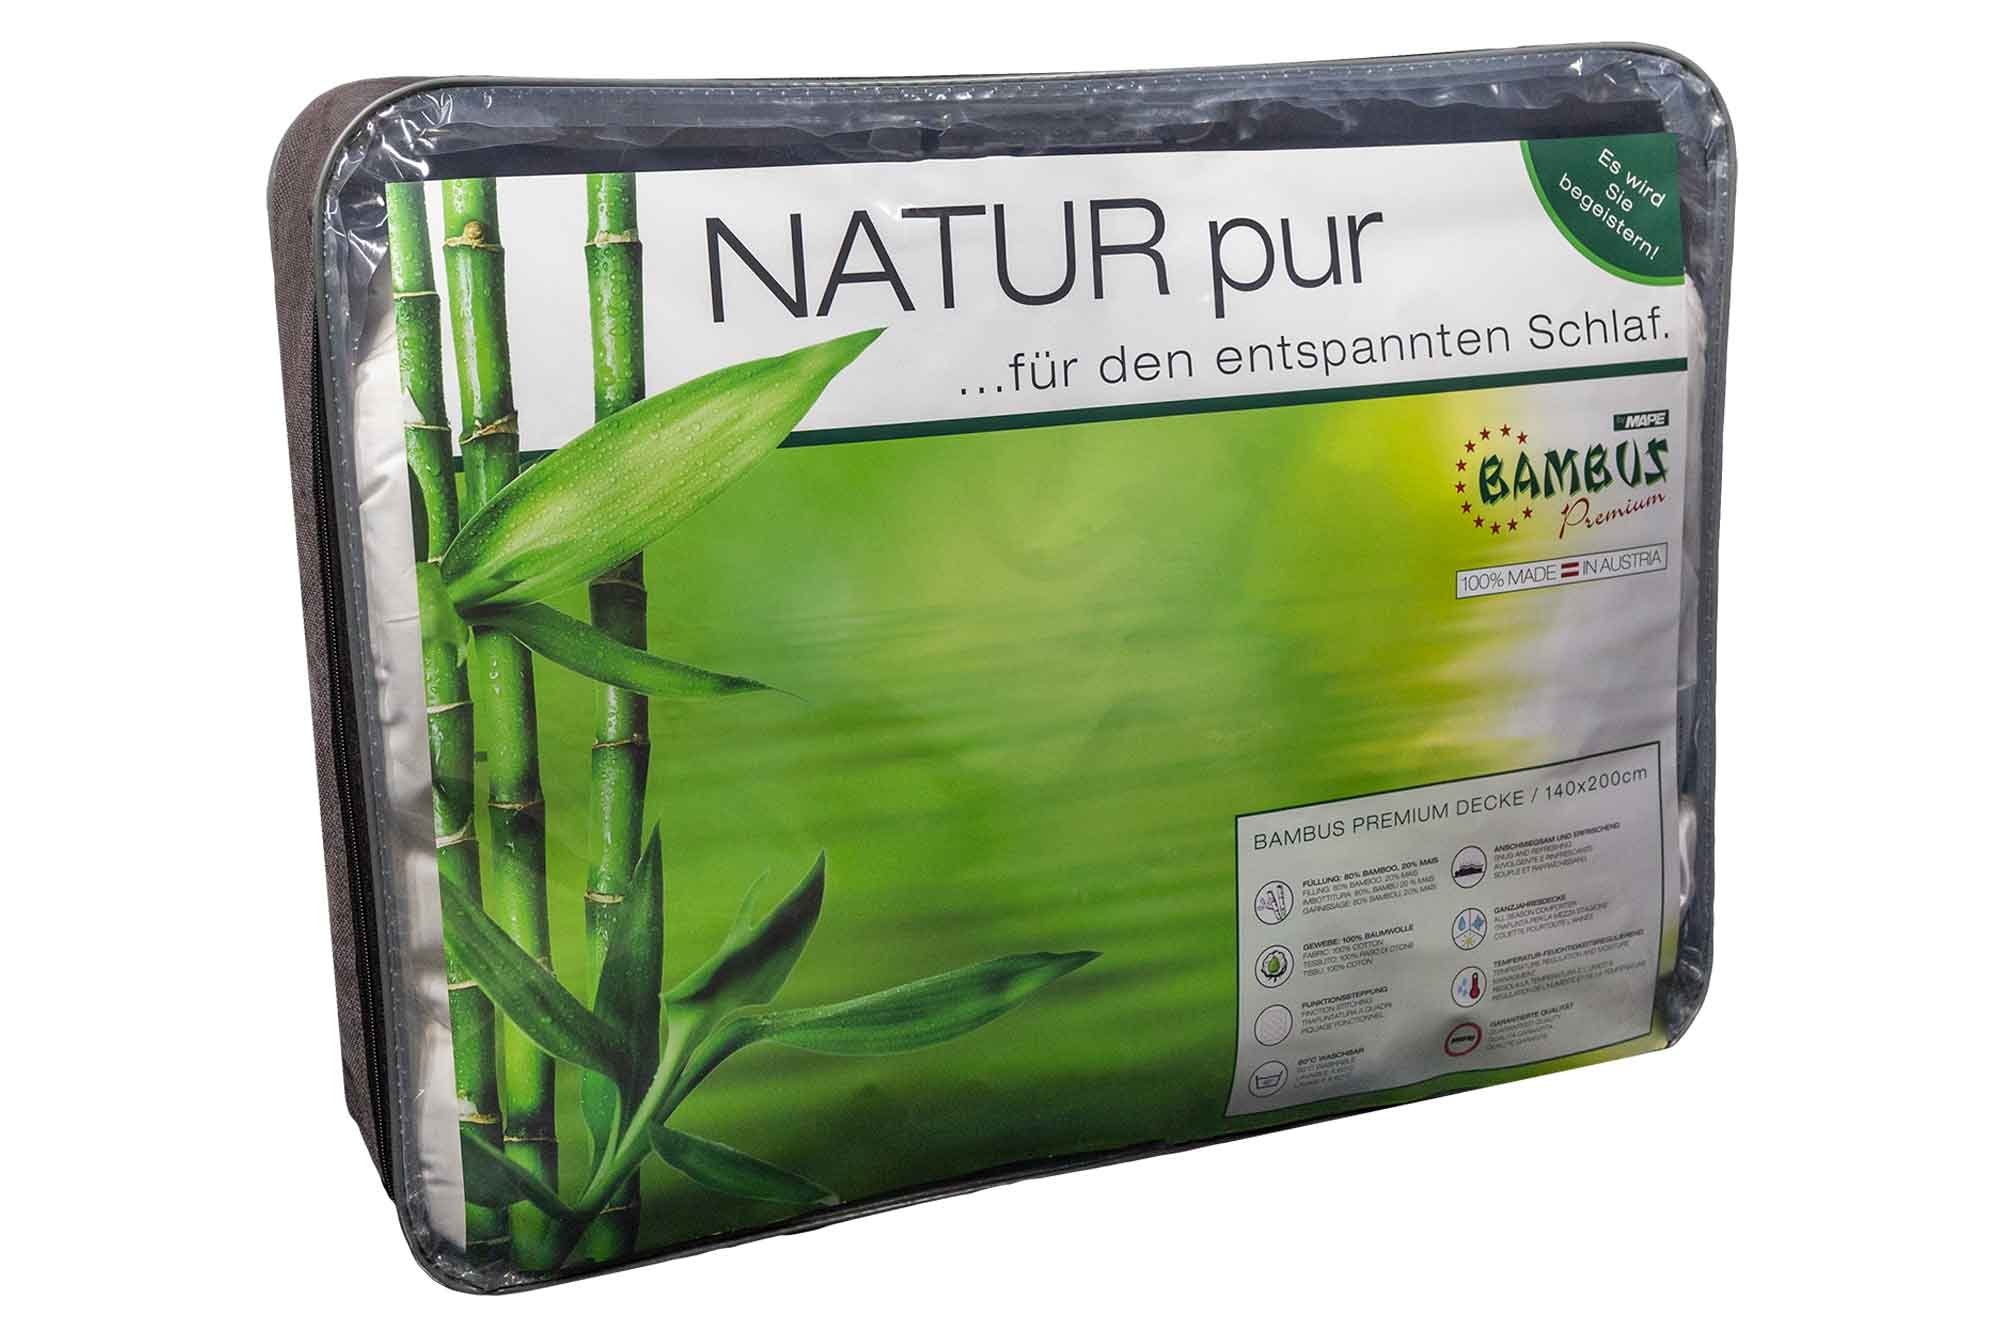 Naturfaserbettdecke, »Bambus Premium Decke 140 x 200 cm«, Eccovital,  Füllung: Bambus